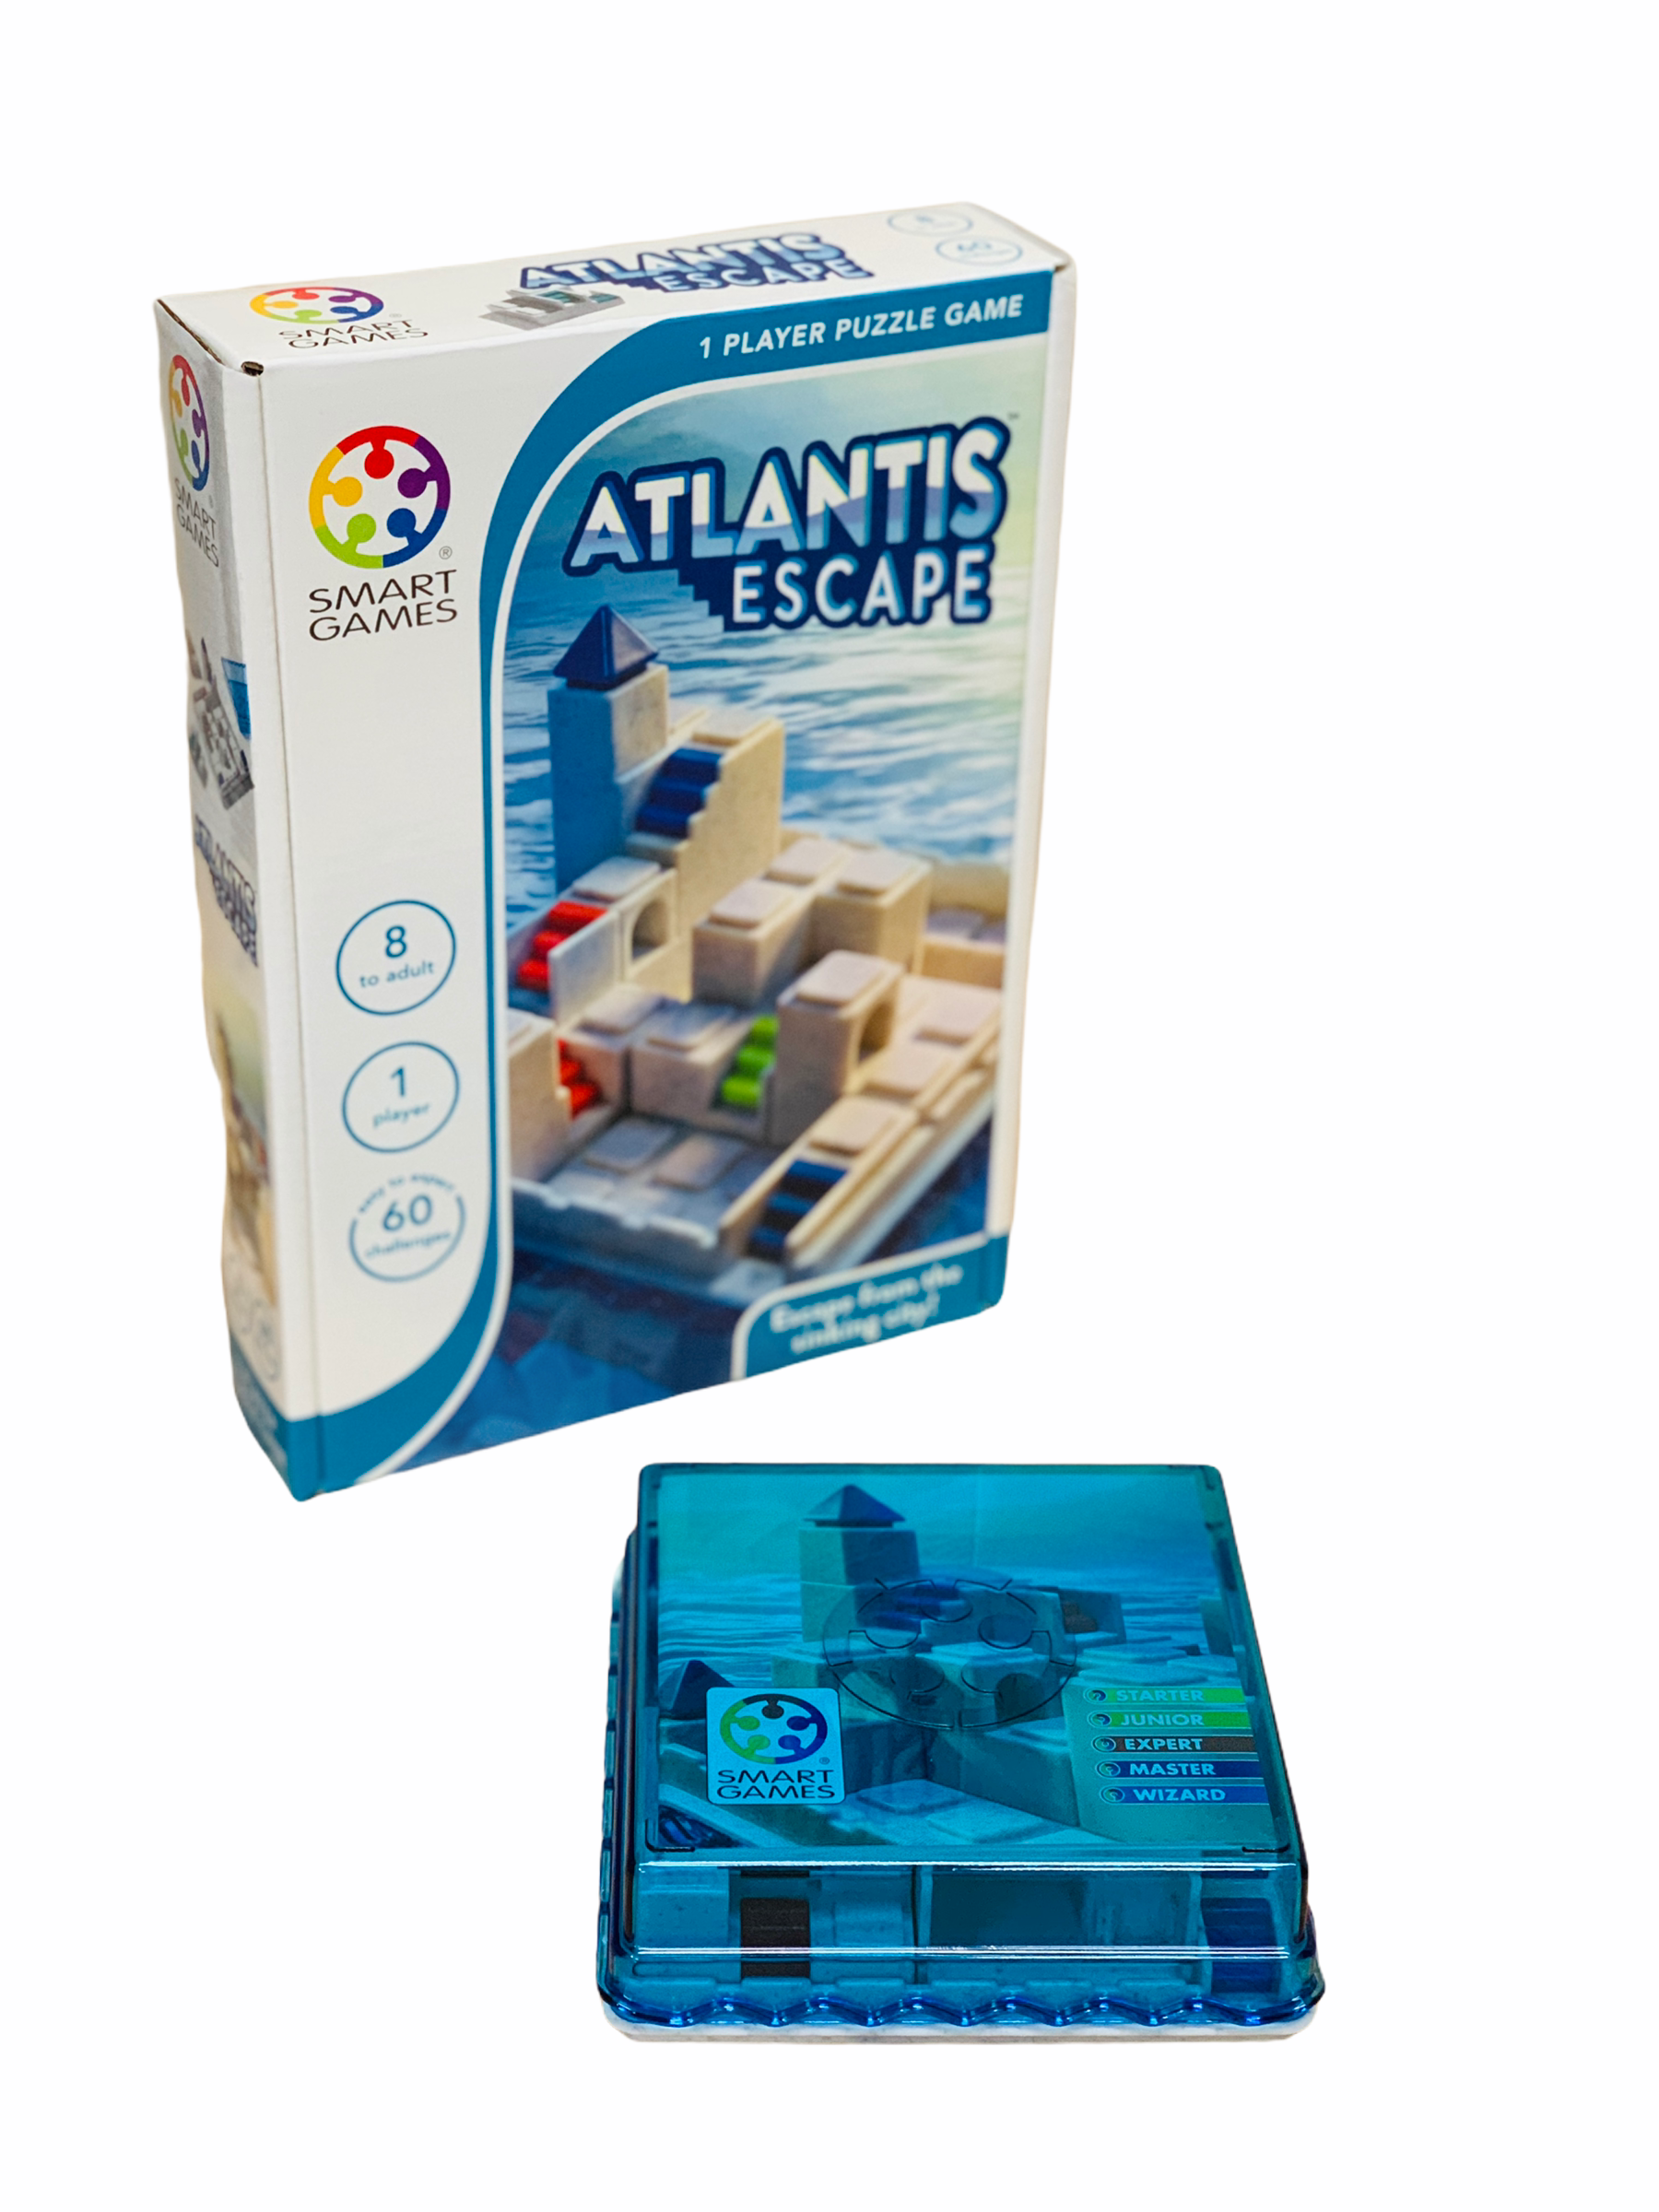 Smart Games Atlantis Escape Game